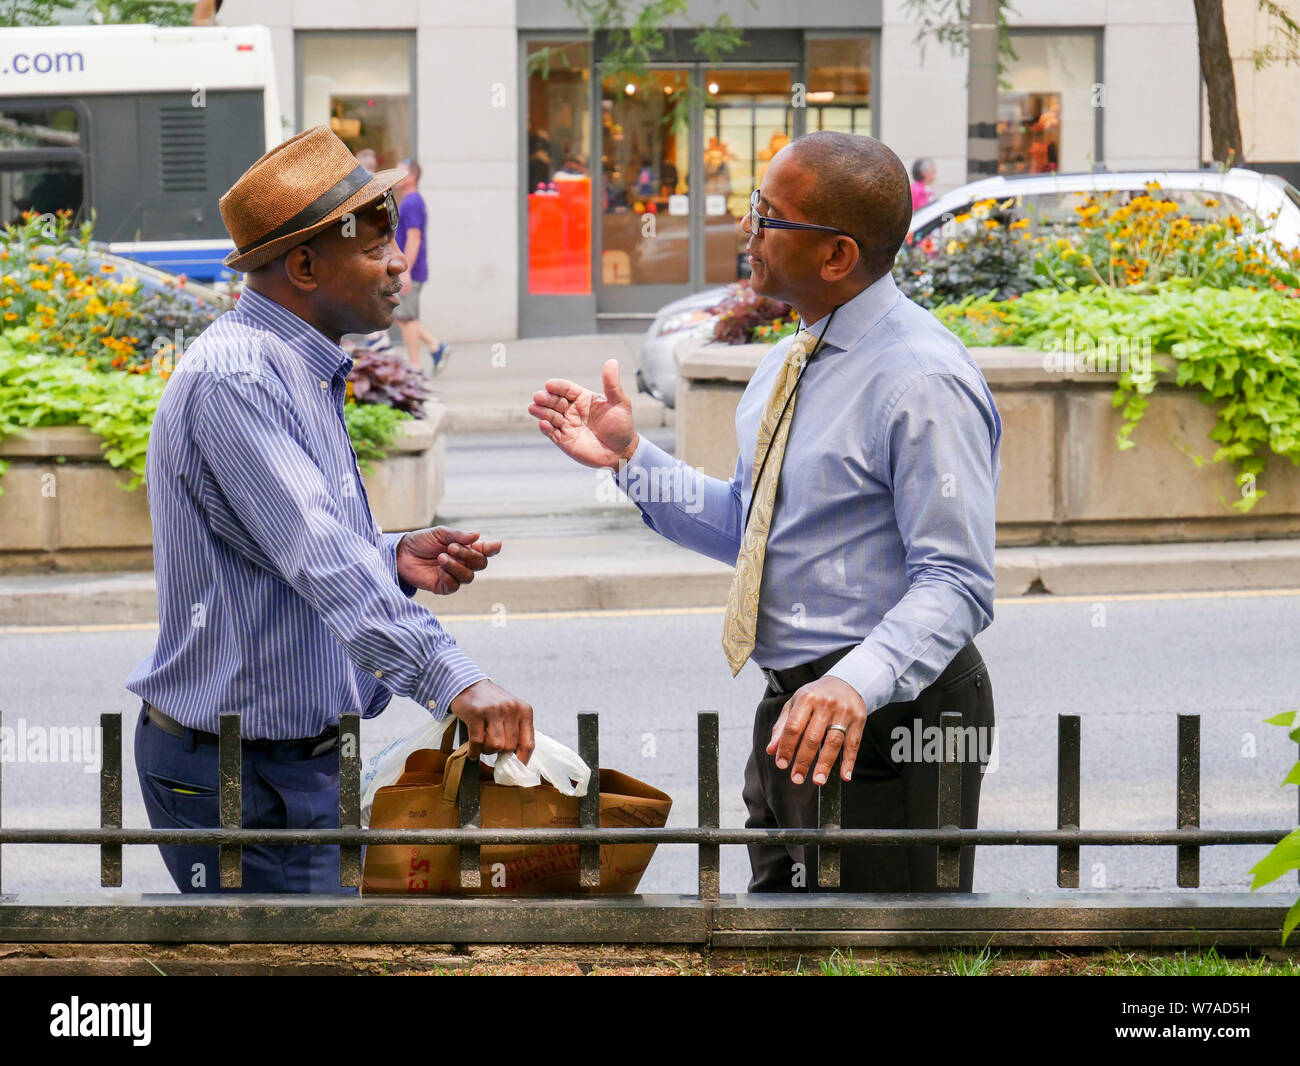 Two men engrossed in conversation. Michigan Avenue, Chicago, Illinois. Stock Photo